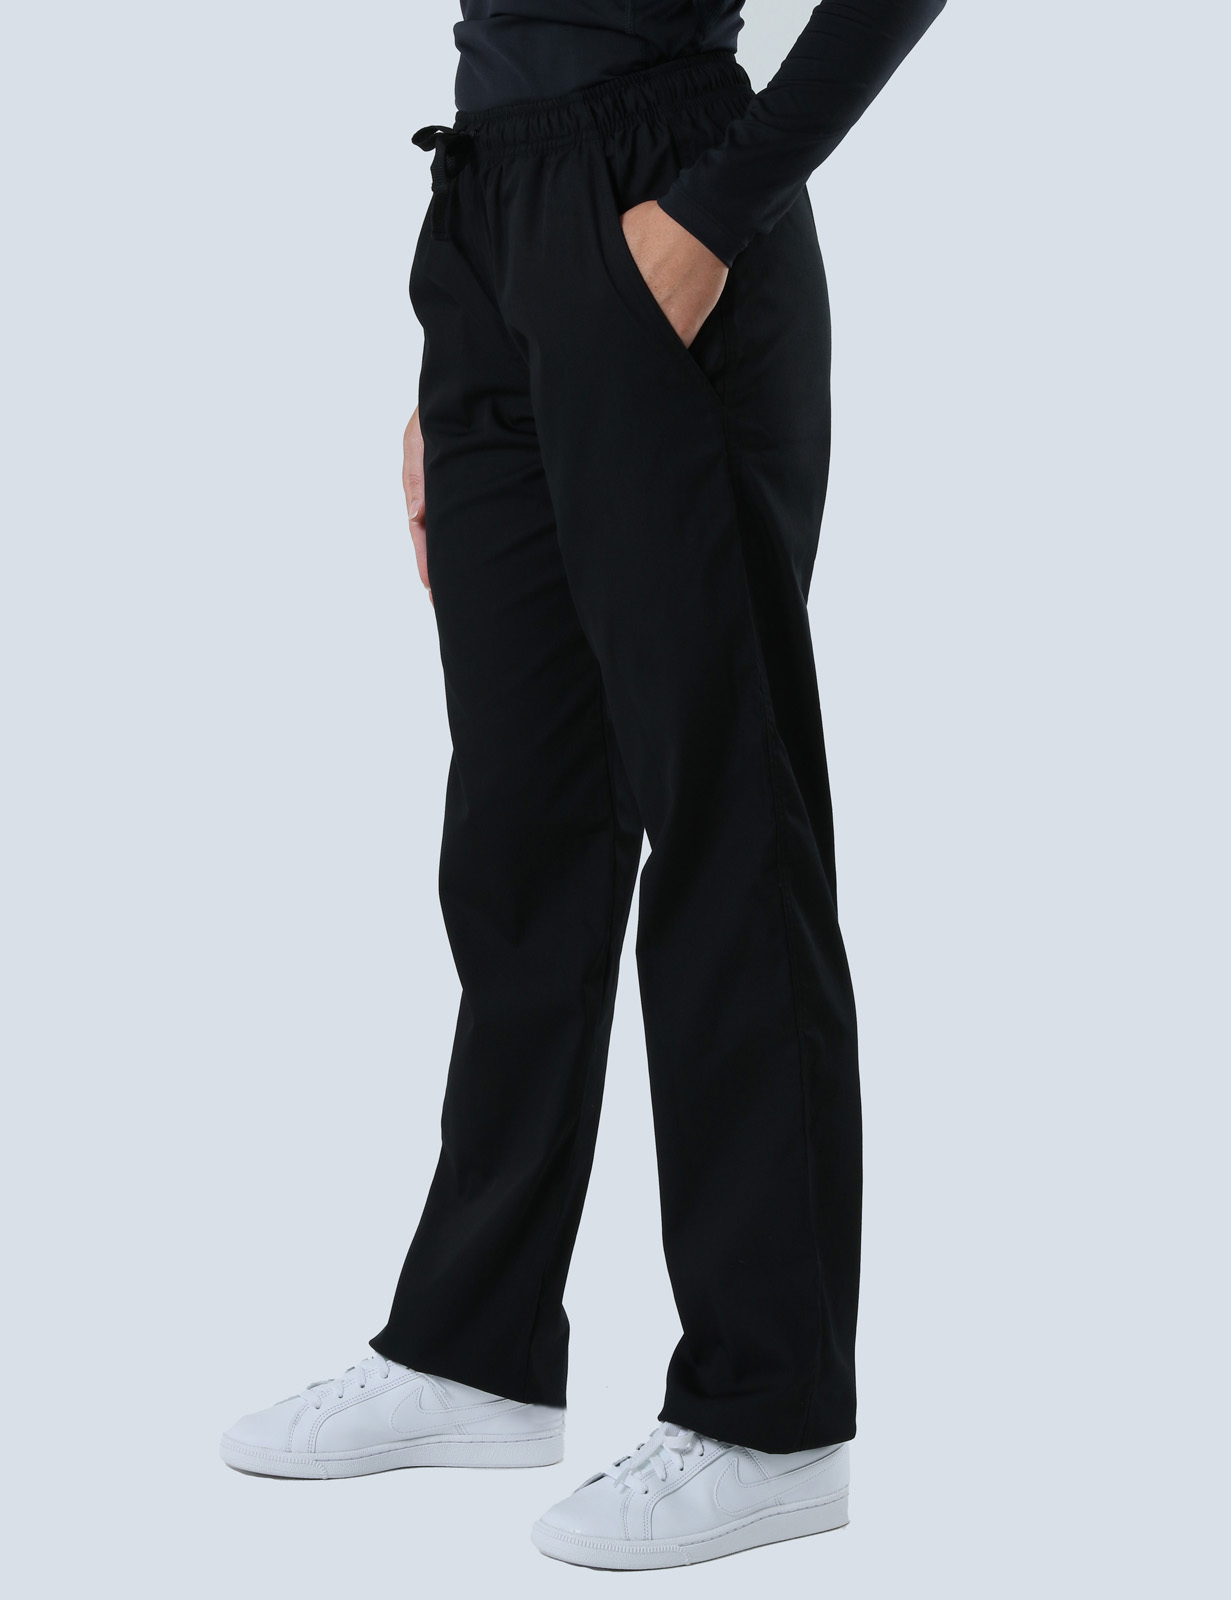 Women's Regular Cut Pants - Black - X Small